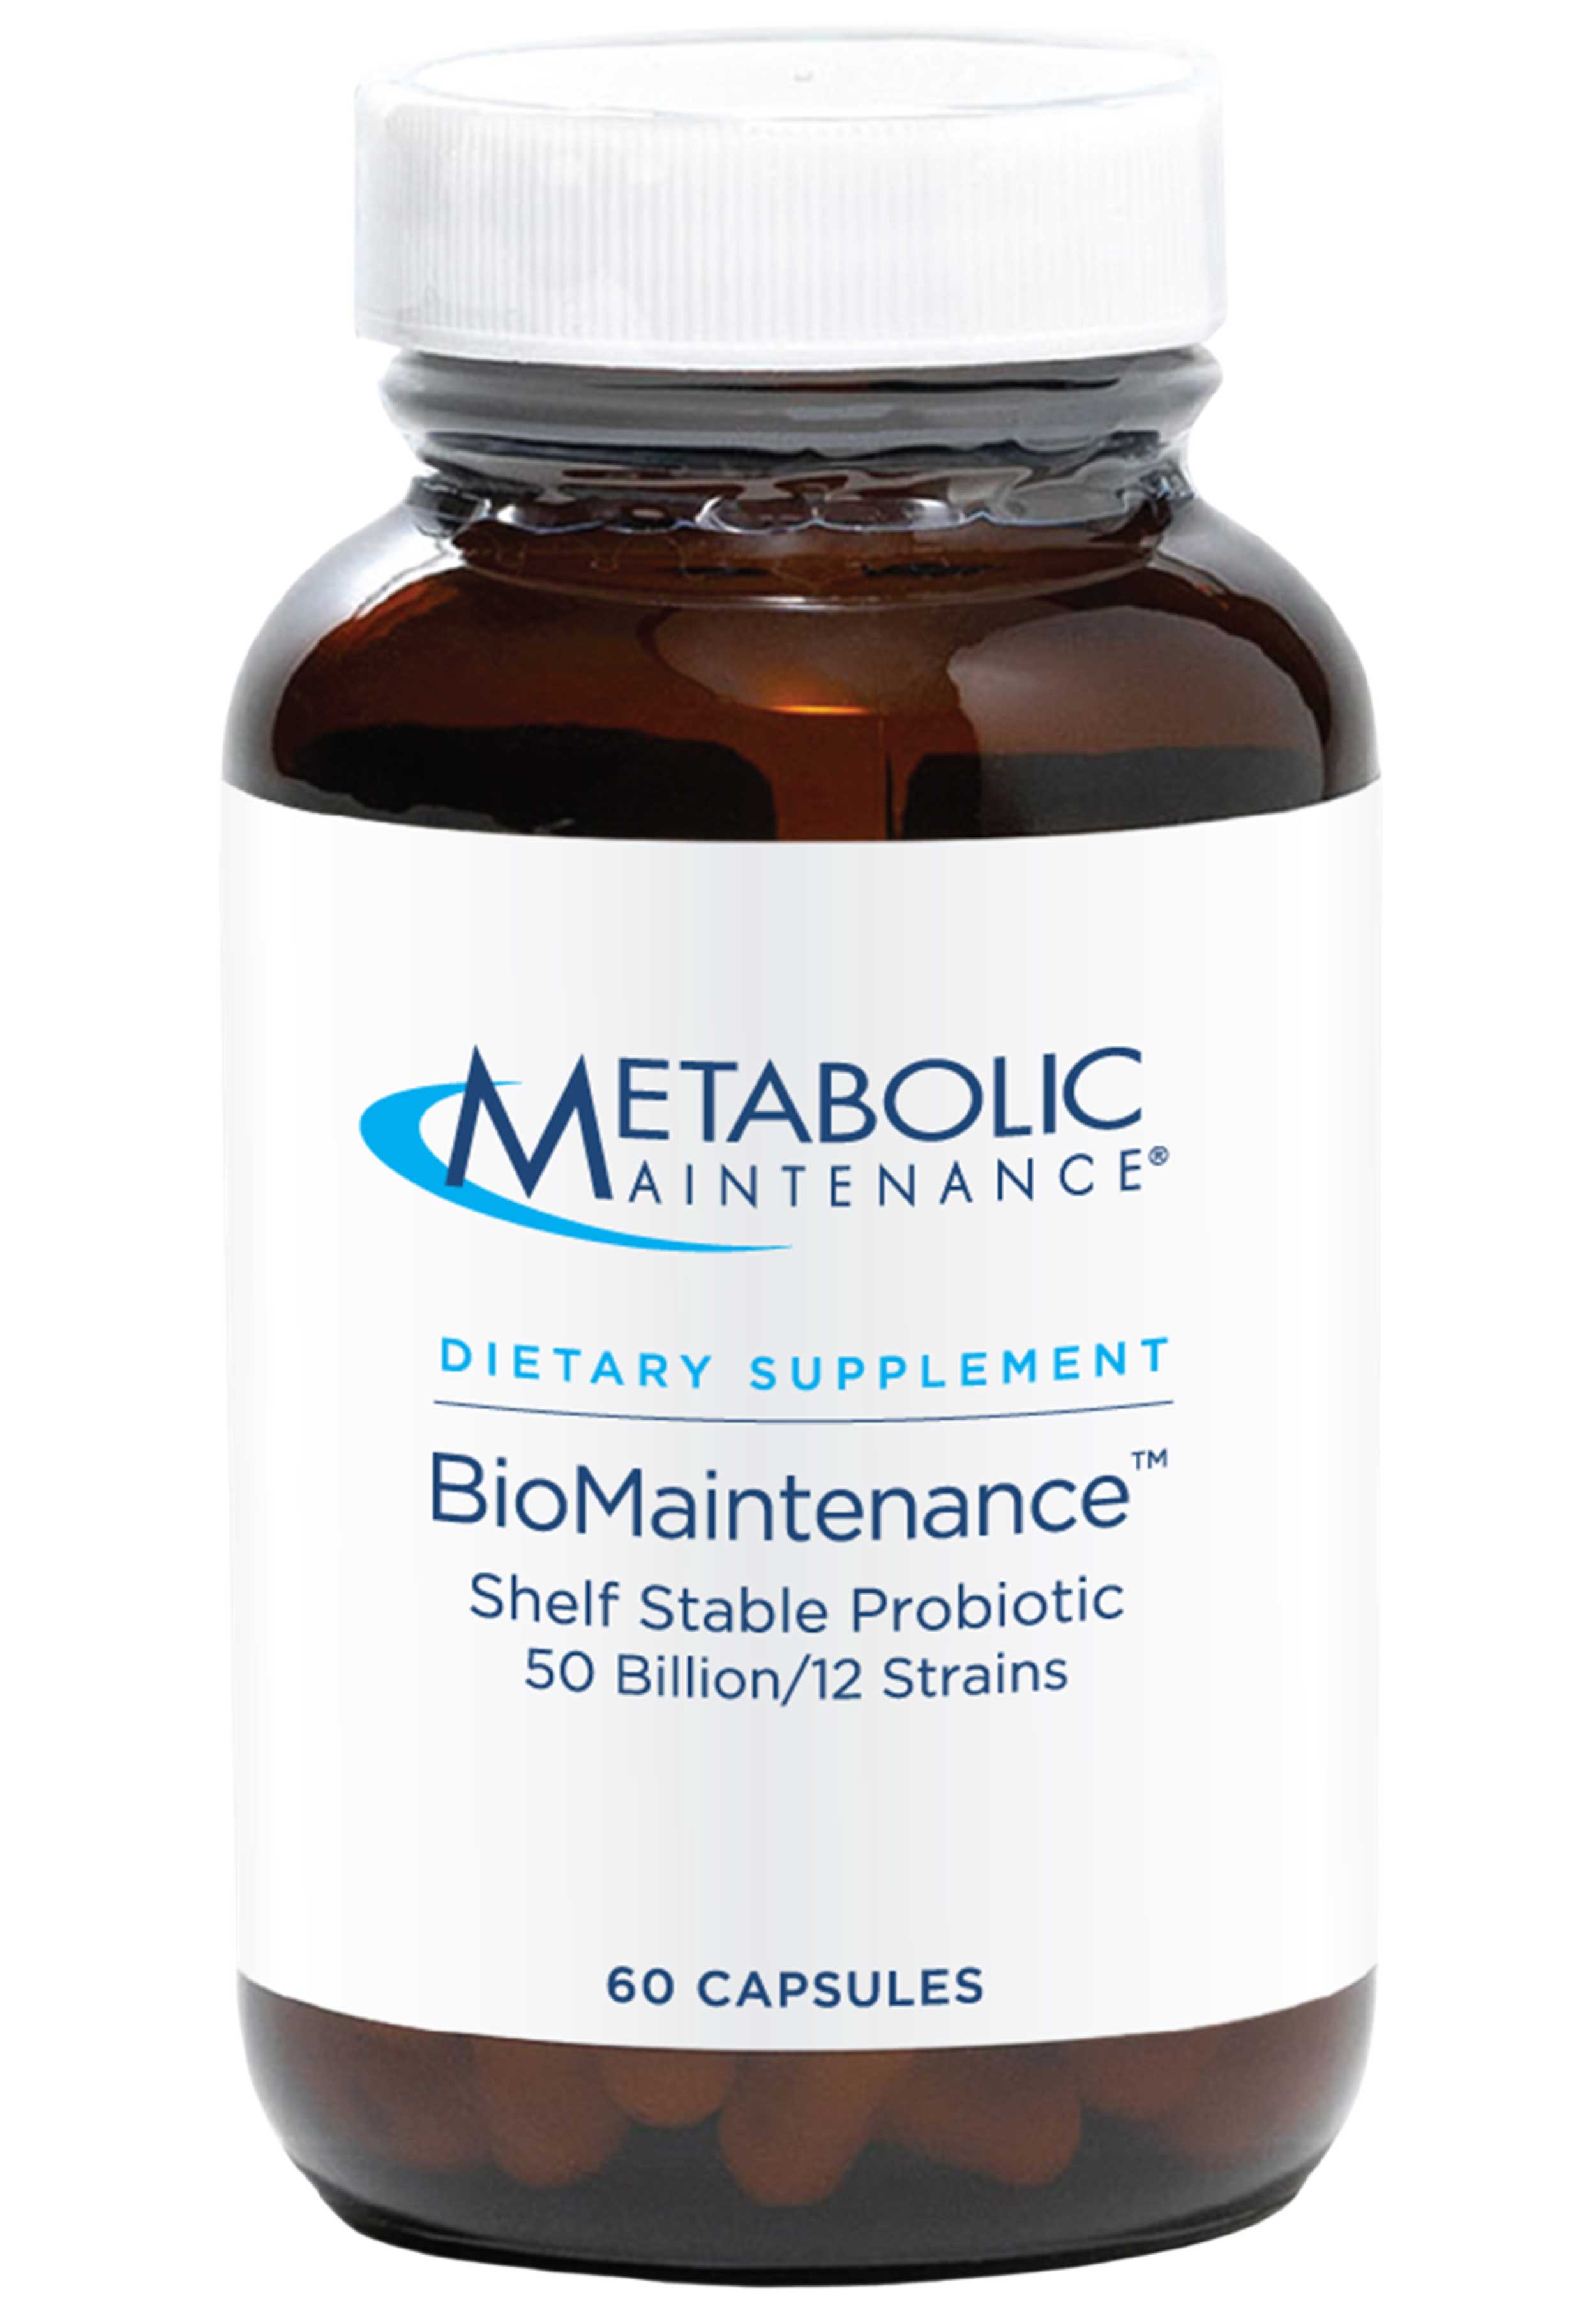 Metabolic Maintenance BioMaintenance Shelf Stable Probiotic